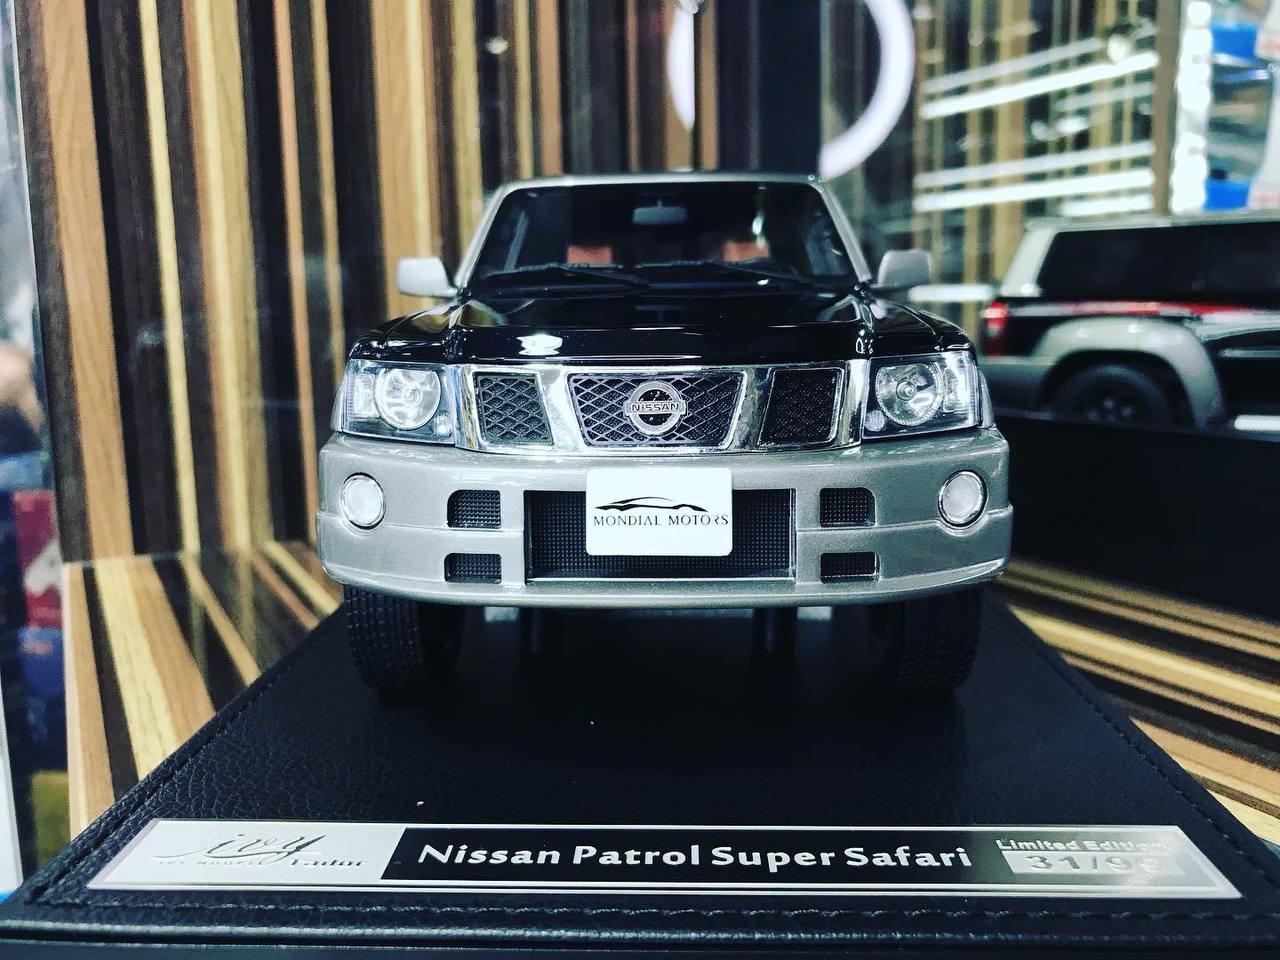 Nissan Patrol Super Safari 1:18 Black - dturman.com